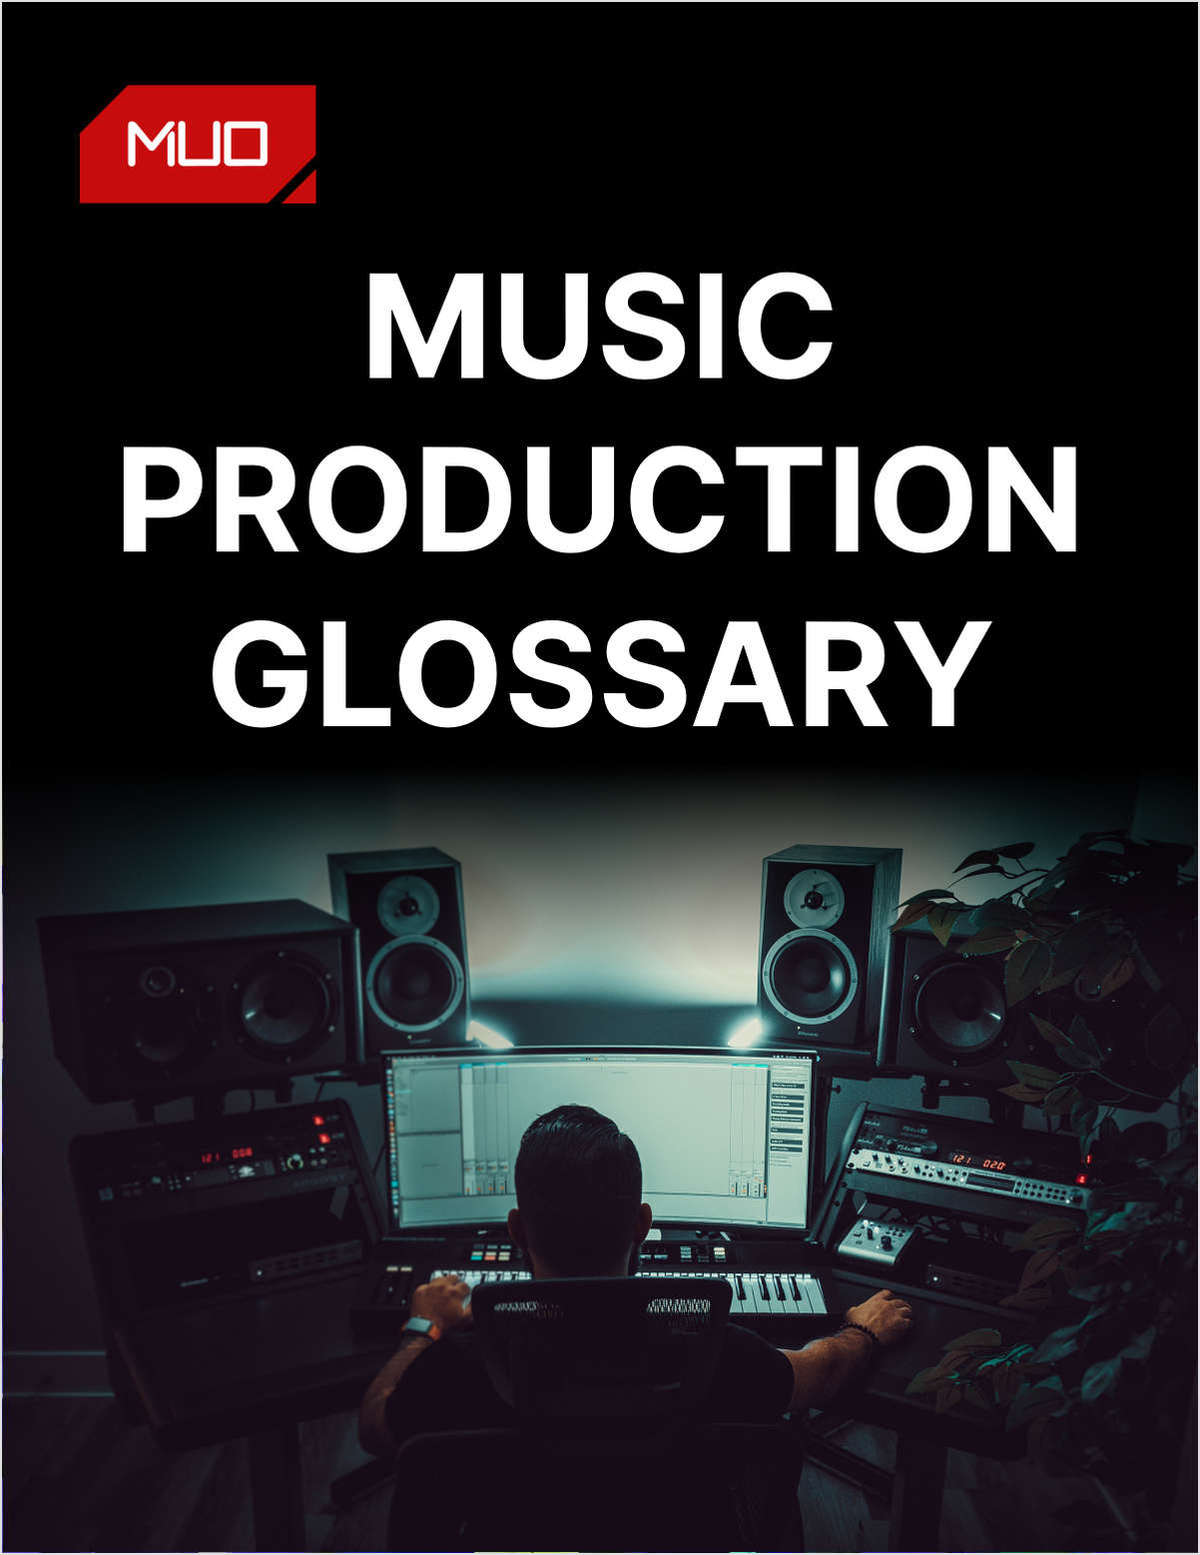 audio production definition